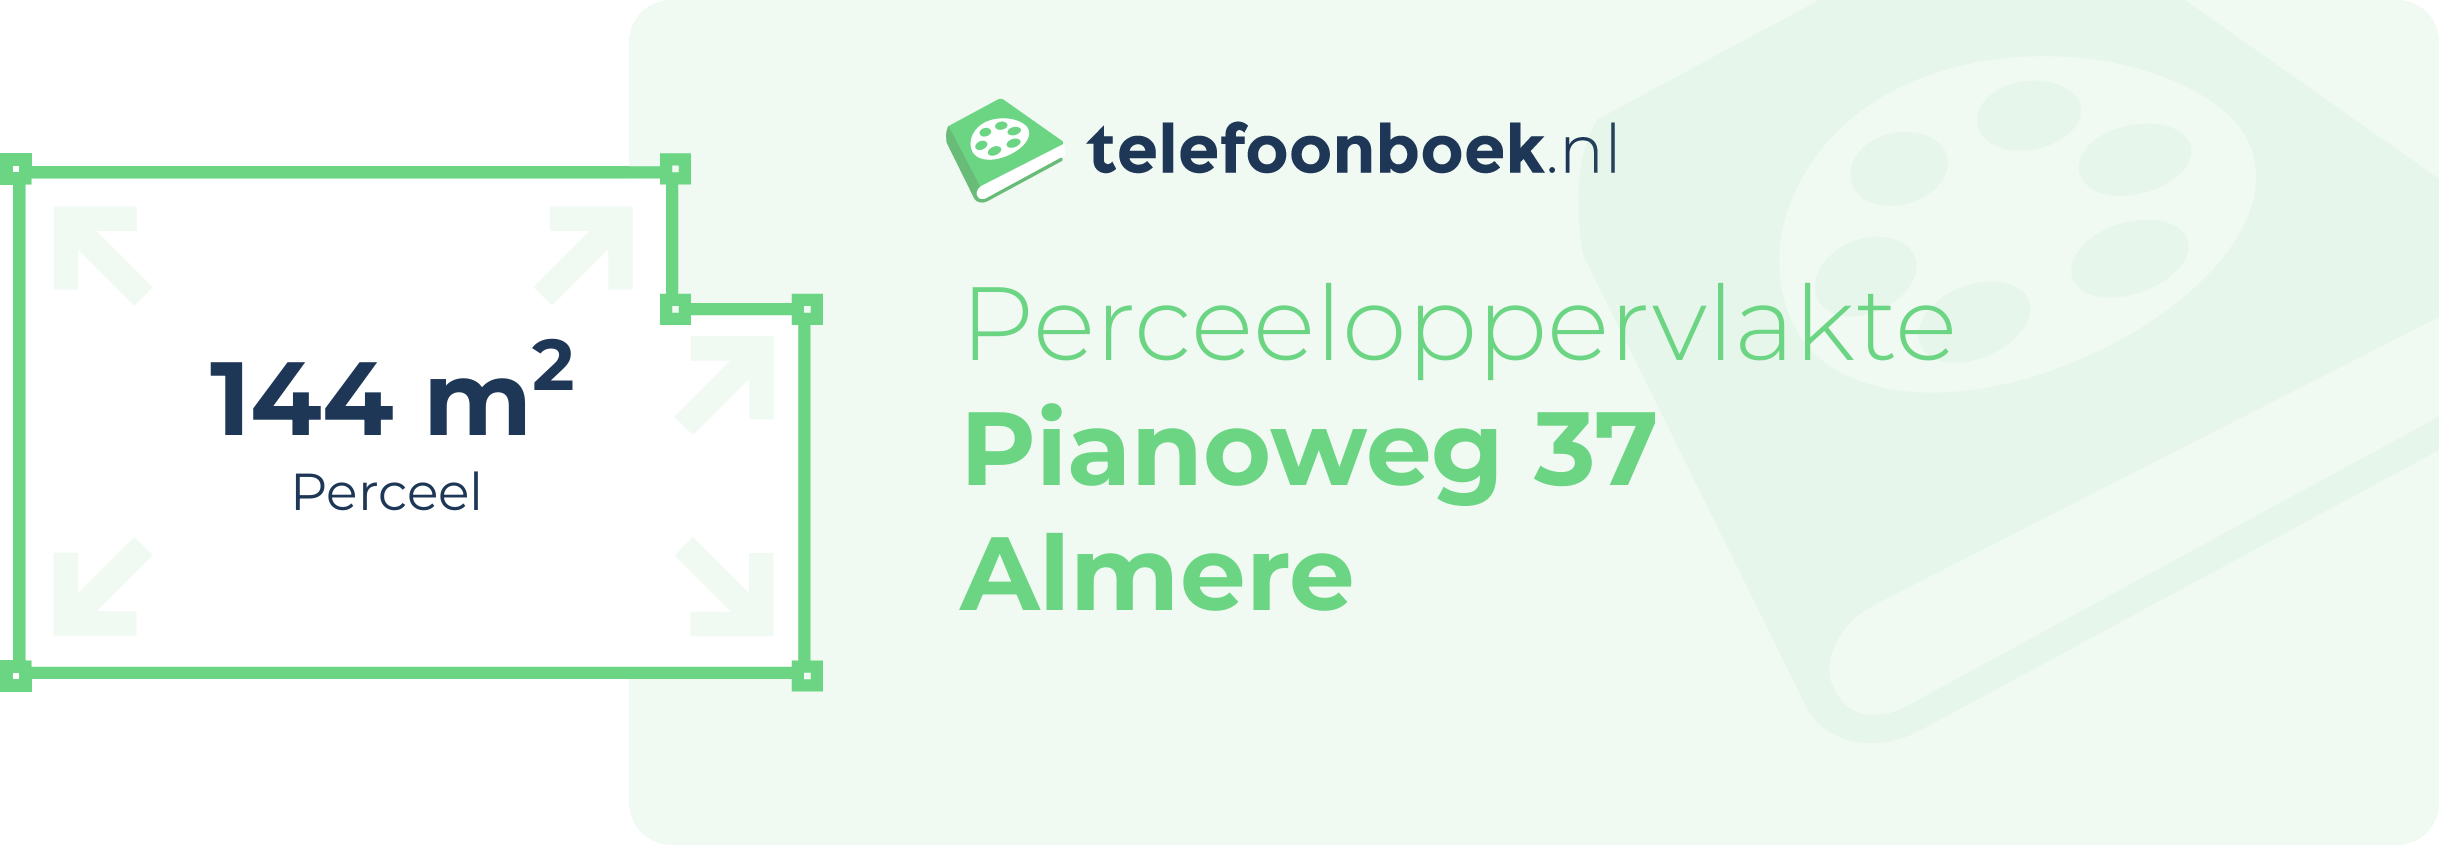 Perceeloppervlakte Pianoweg 37 Almere